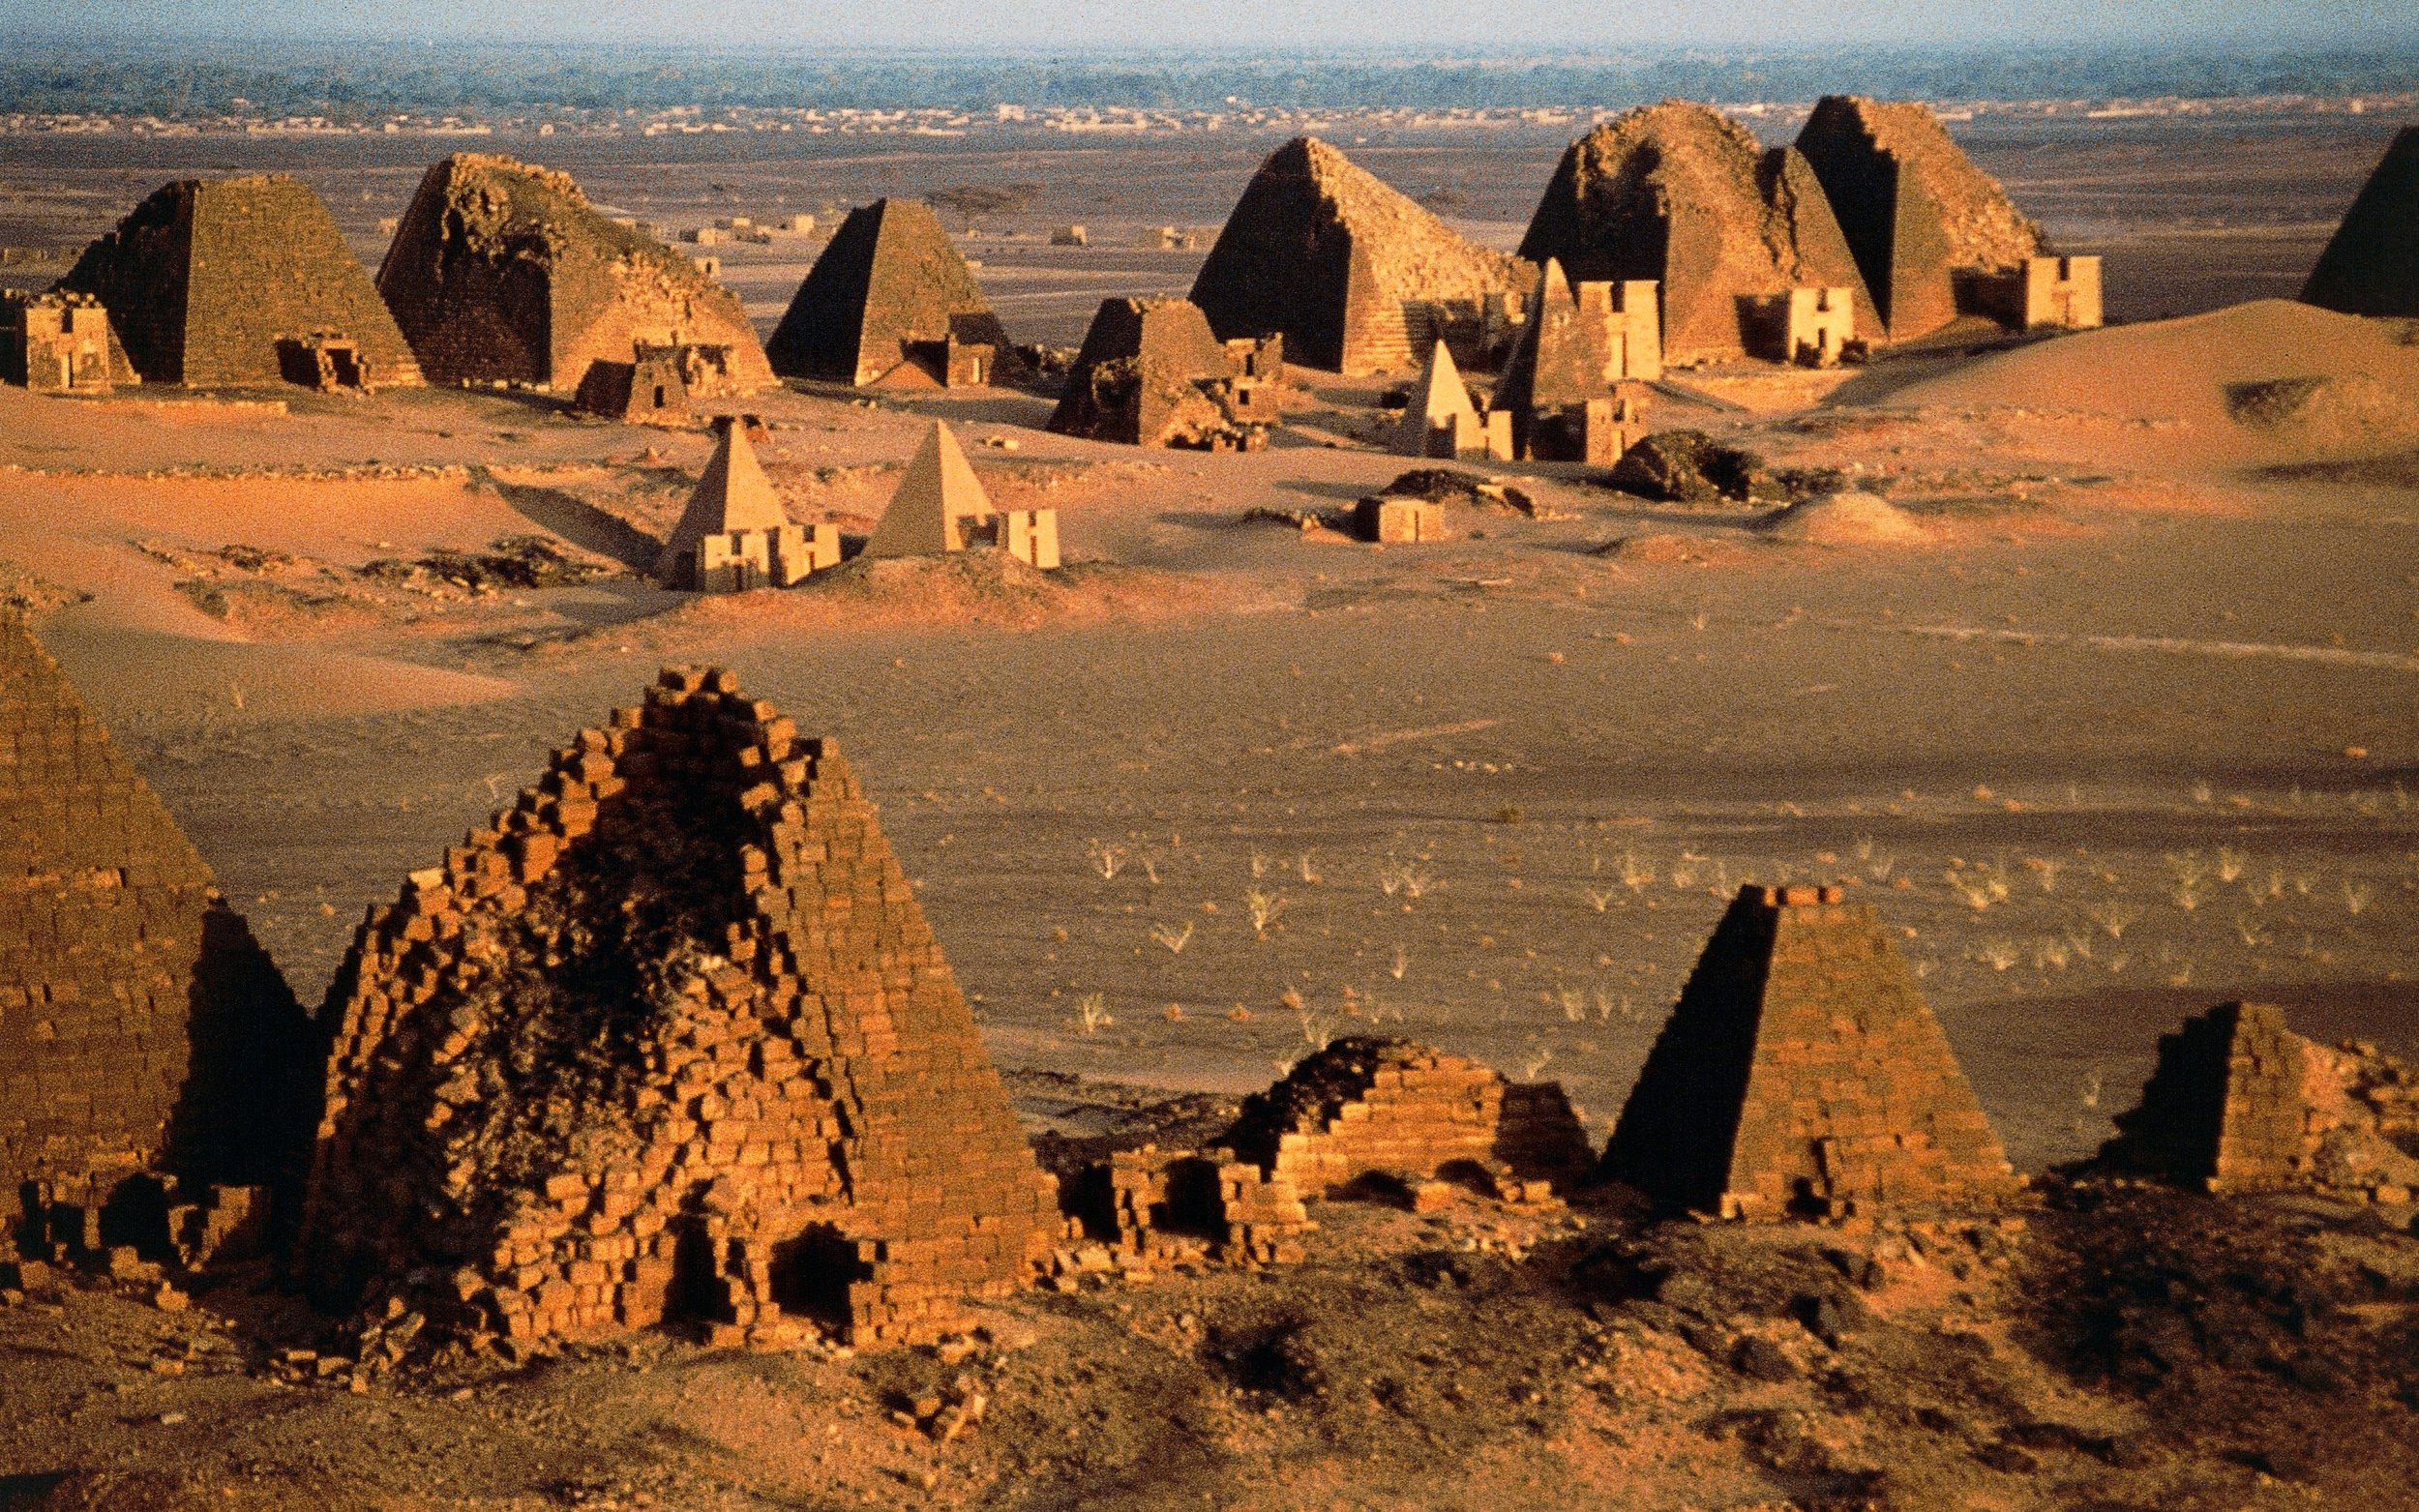 Характер взаимоотношений с природой цивилизации мероэ. Пирамиды Мероэ. Мероэ Судан. Нубийские пирамиды Мероэ. 200 Пирамид древнего царства куш. Пирамиды Судана.